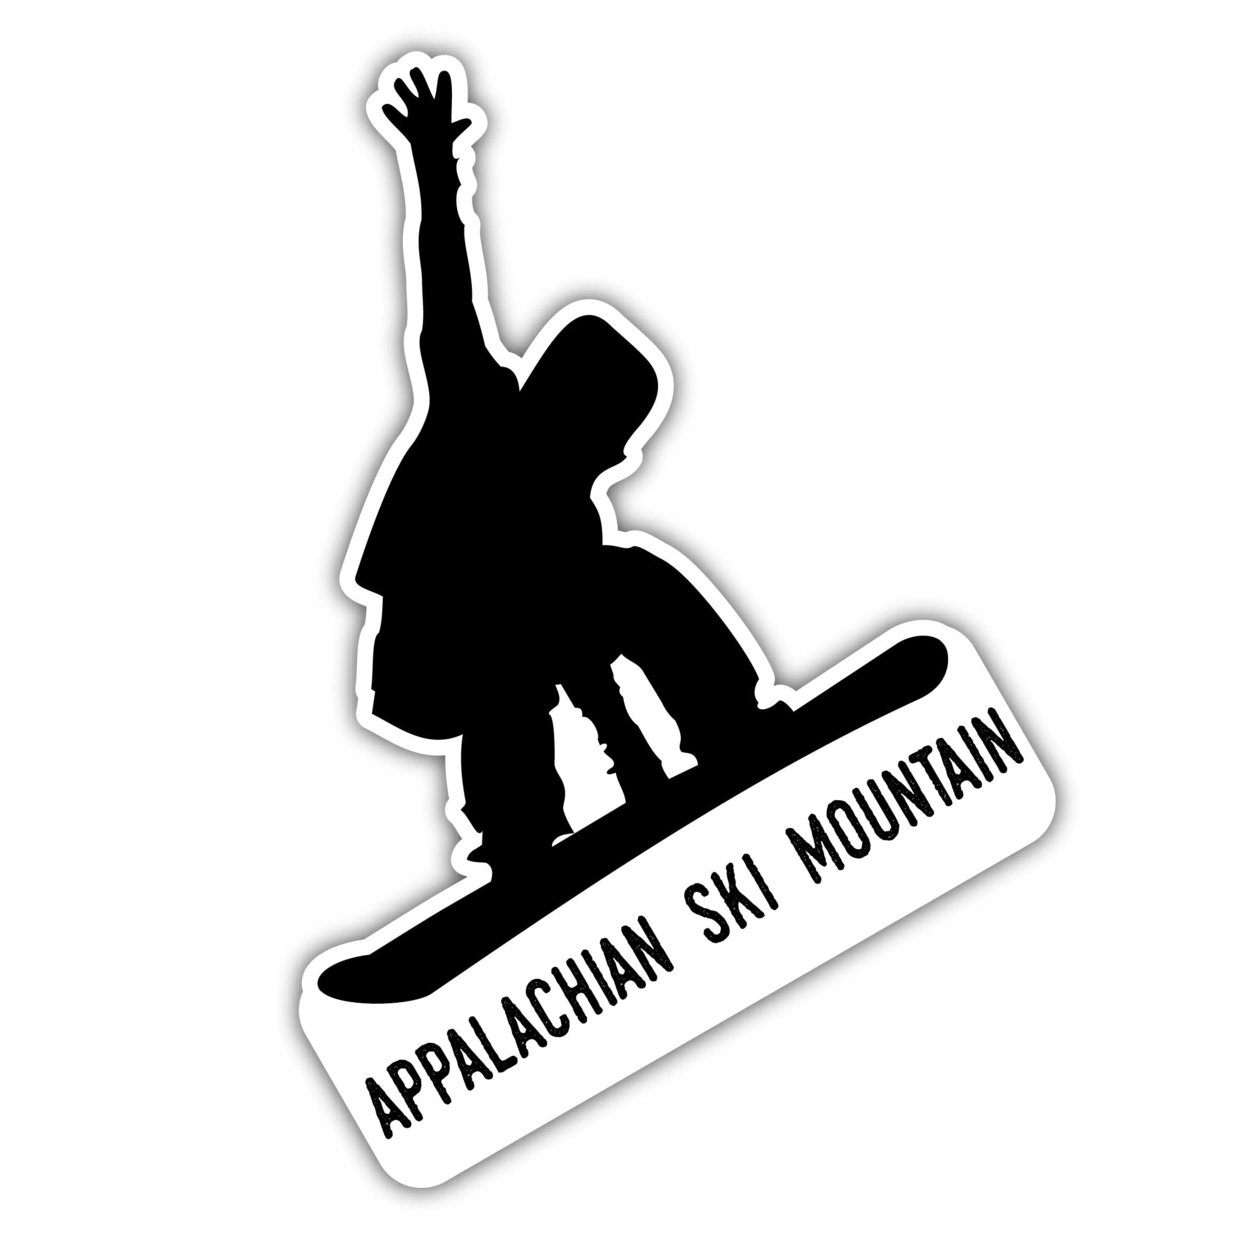 Appalachian Ski Mountain North Carolina Ski Adventures Souvenir 4 Inch Vinyl Decal Sticker Mountain Design